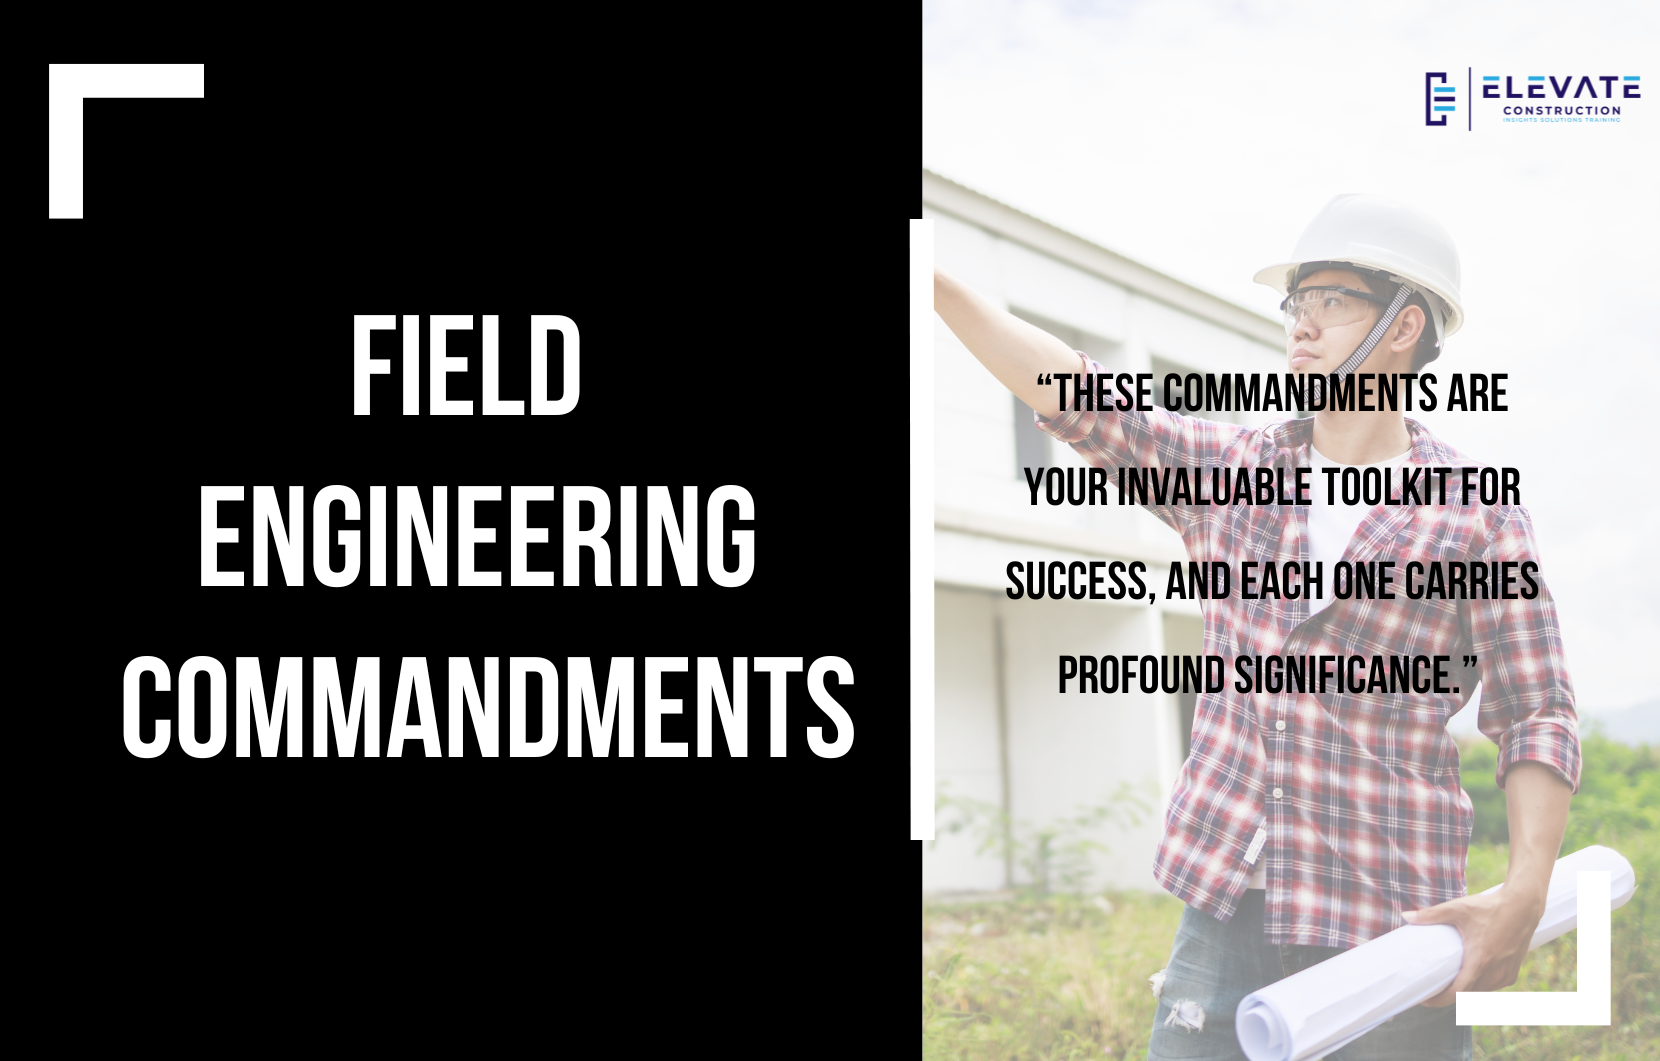 The Field Engineering Commandments